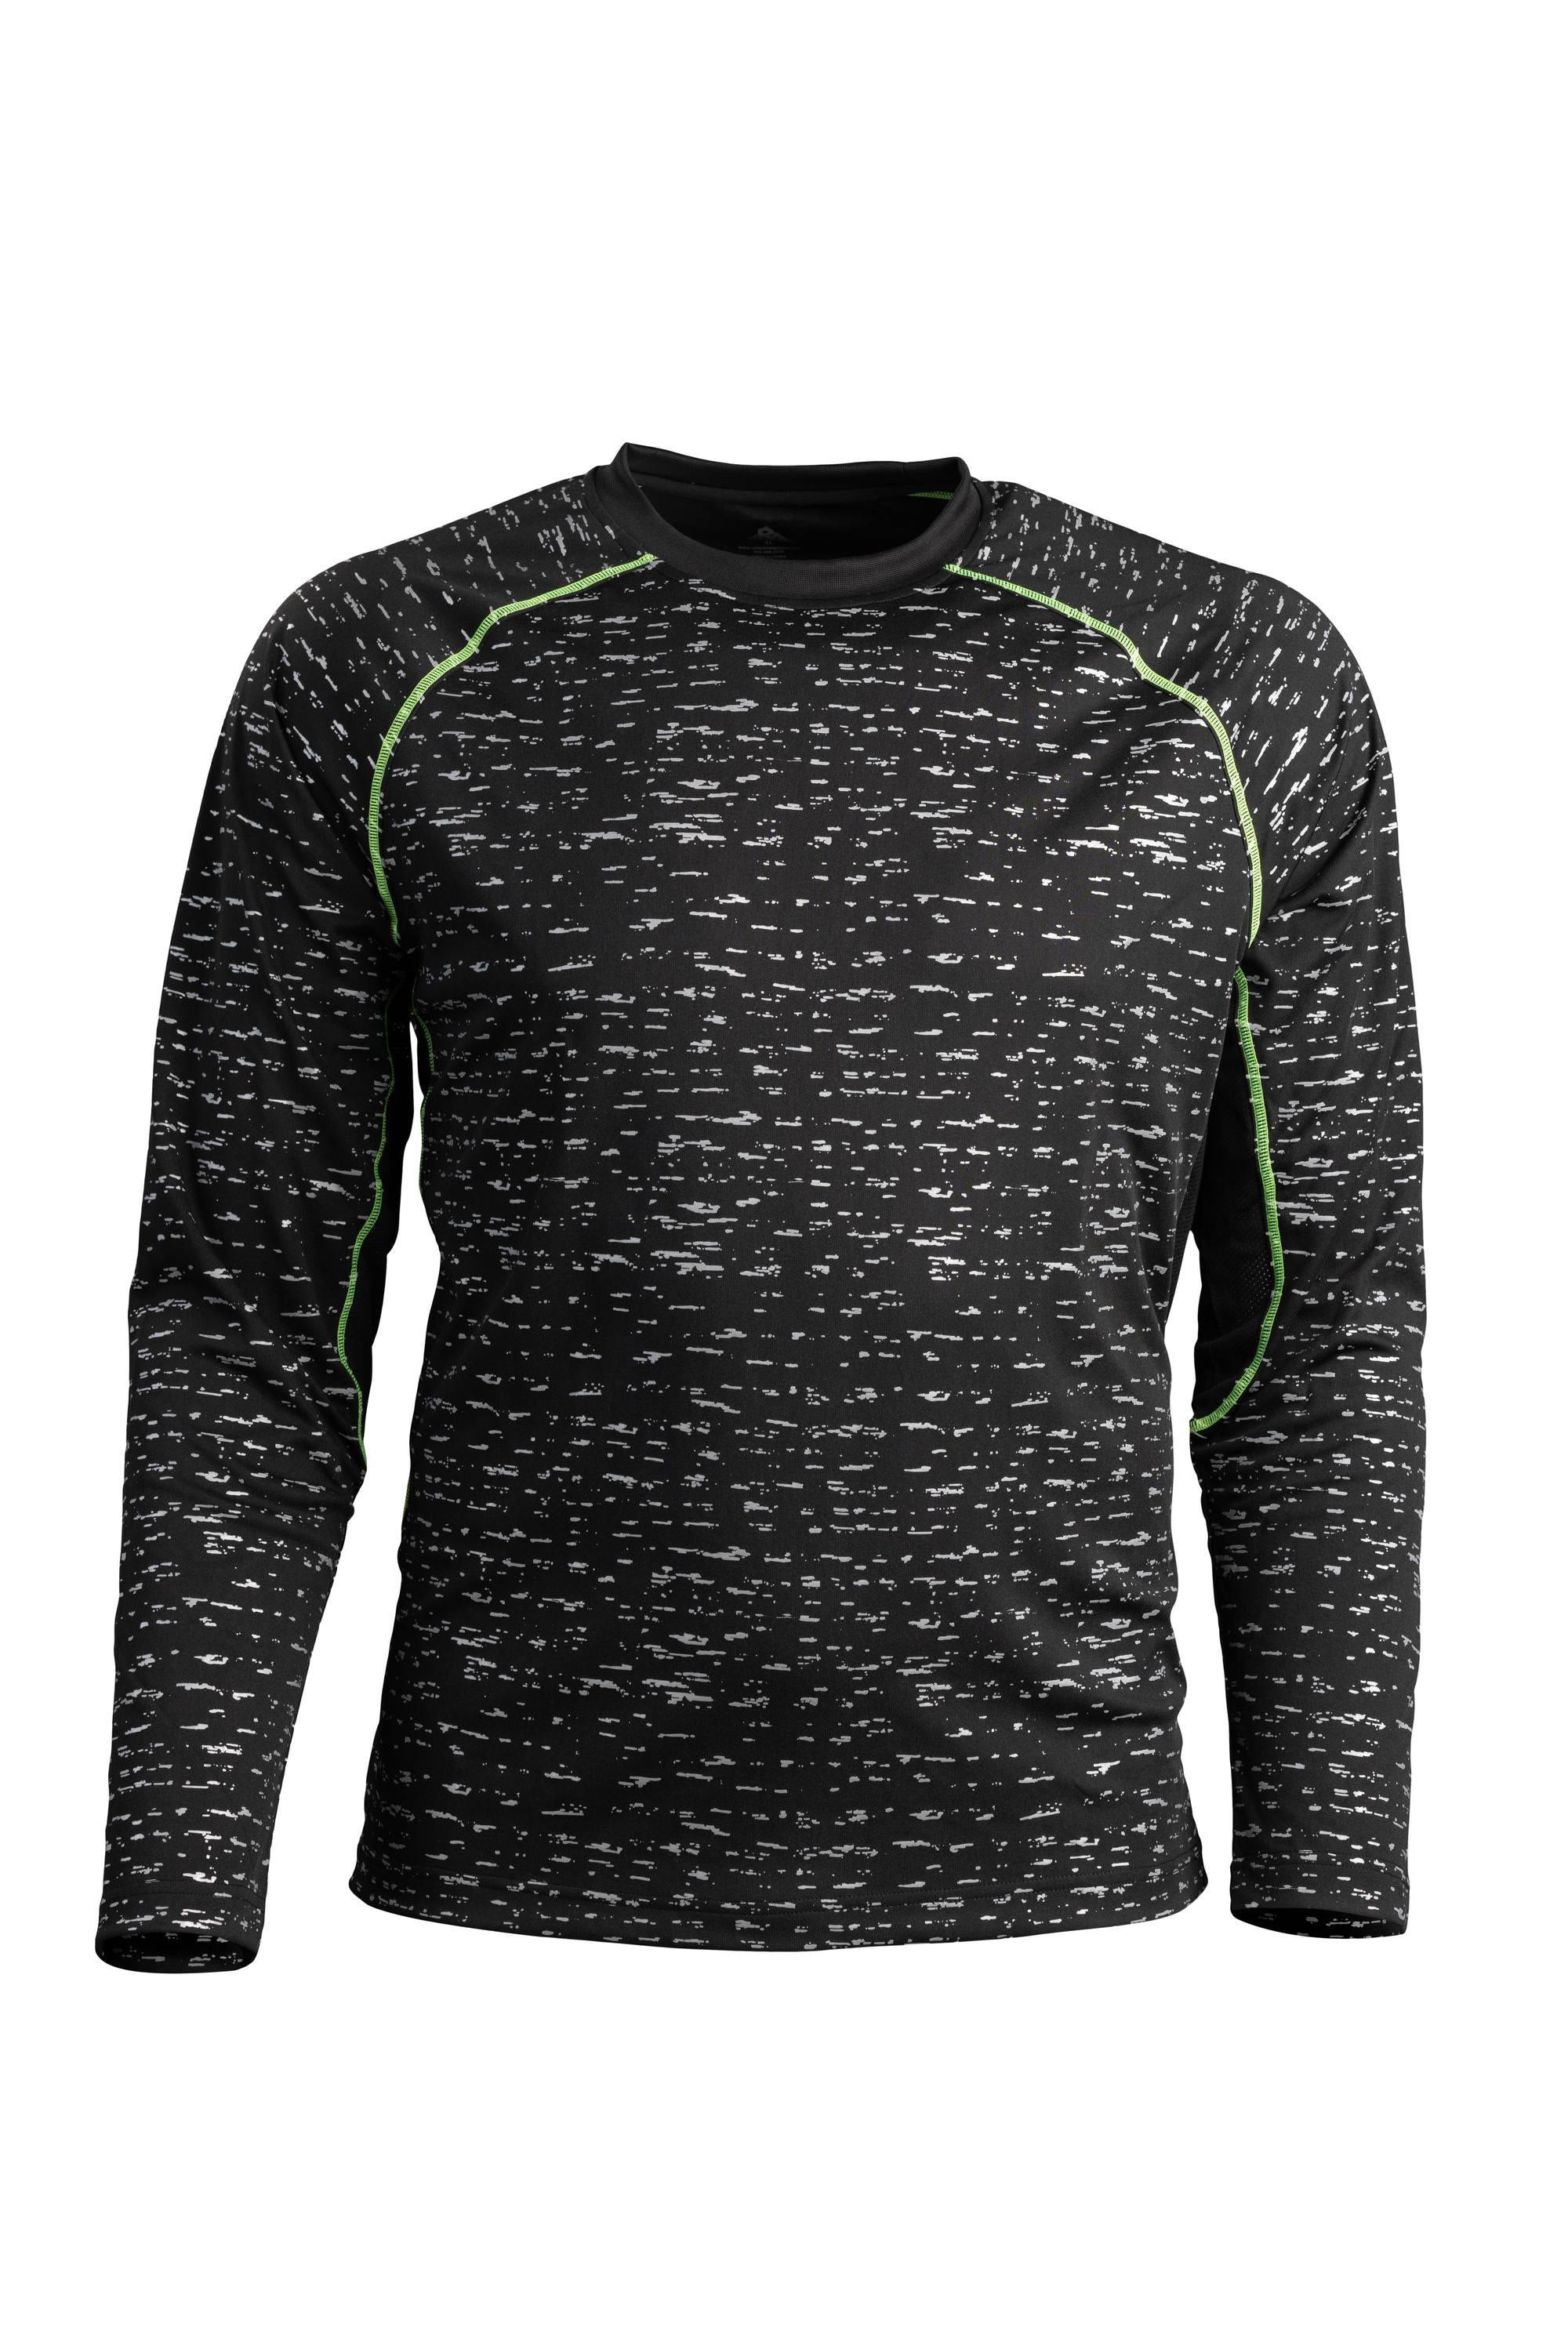 Men's Lime-Black Camo Long Sleeve WildSpark™ Athletic Shirt